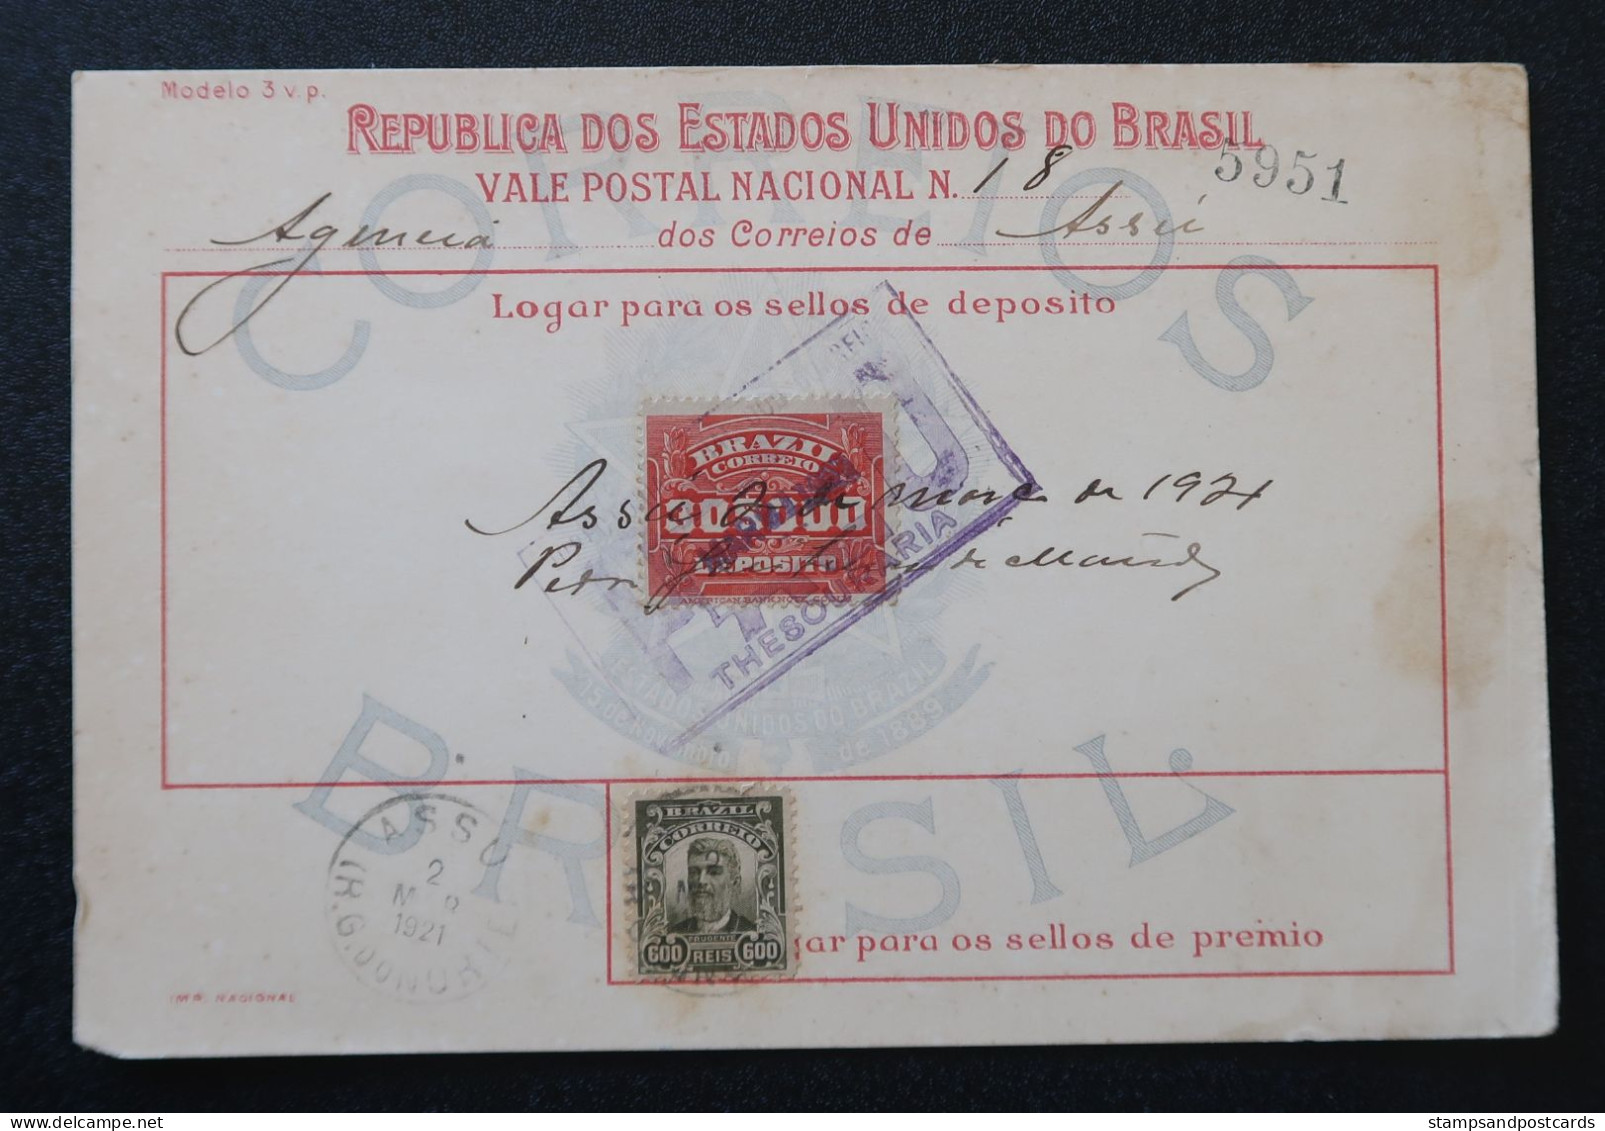 Brèsil Brasil Mandat Vale Postal 1921 Assú Açu Rio Grande Norte Timbre Fiscal Deposito Brazil Money Order Revenue Stamp - Briefe U. Dokumente